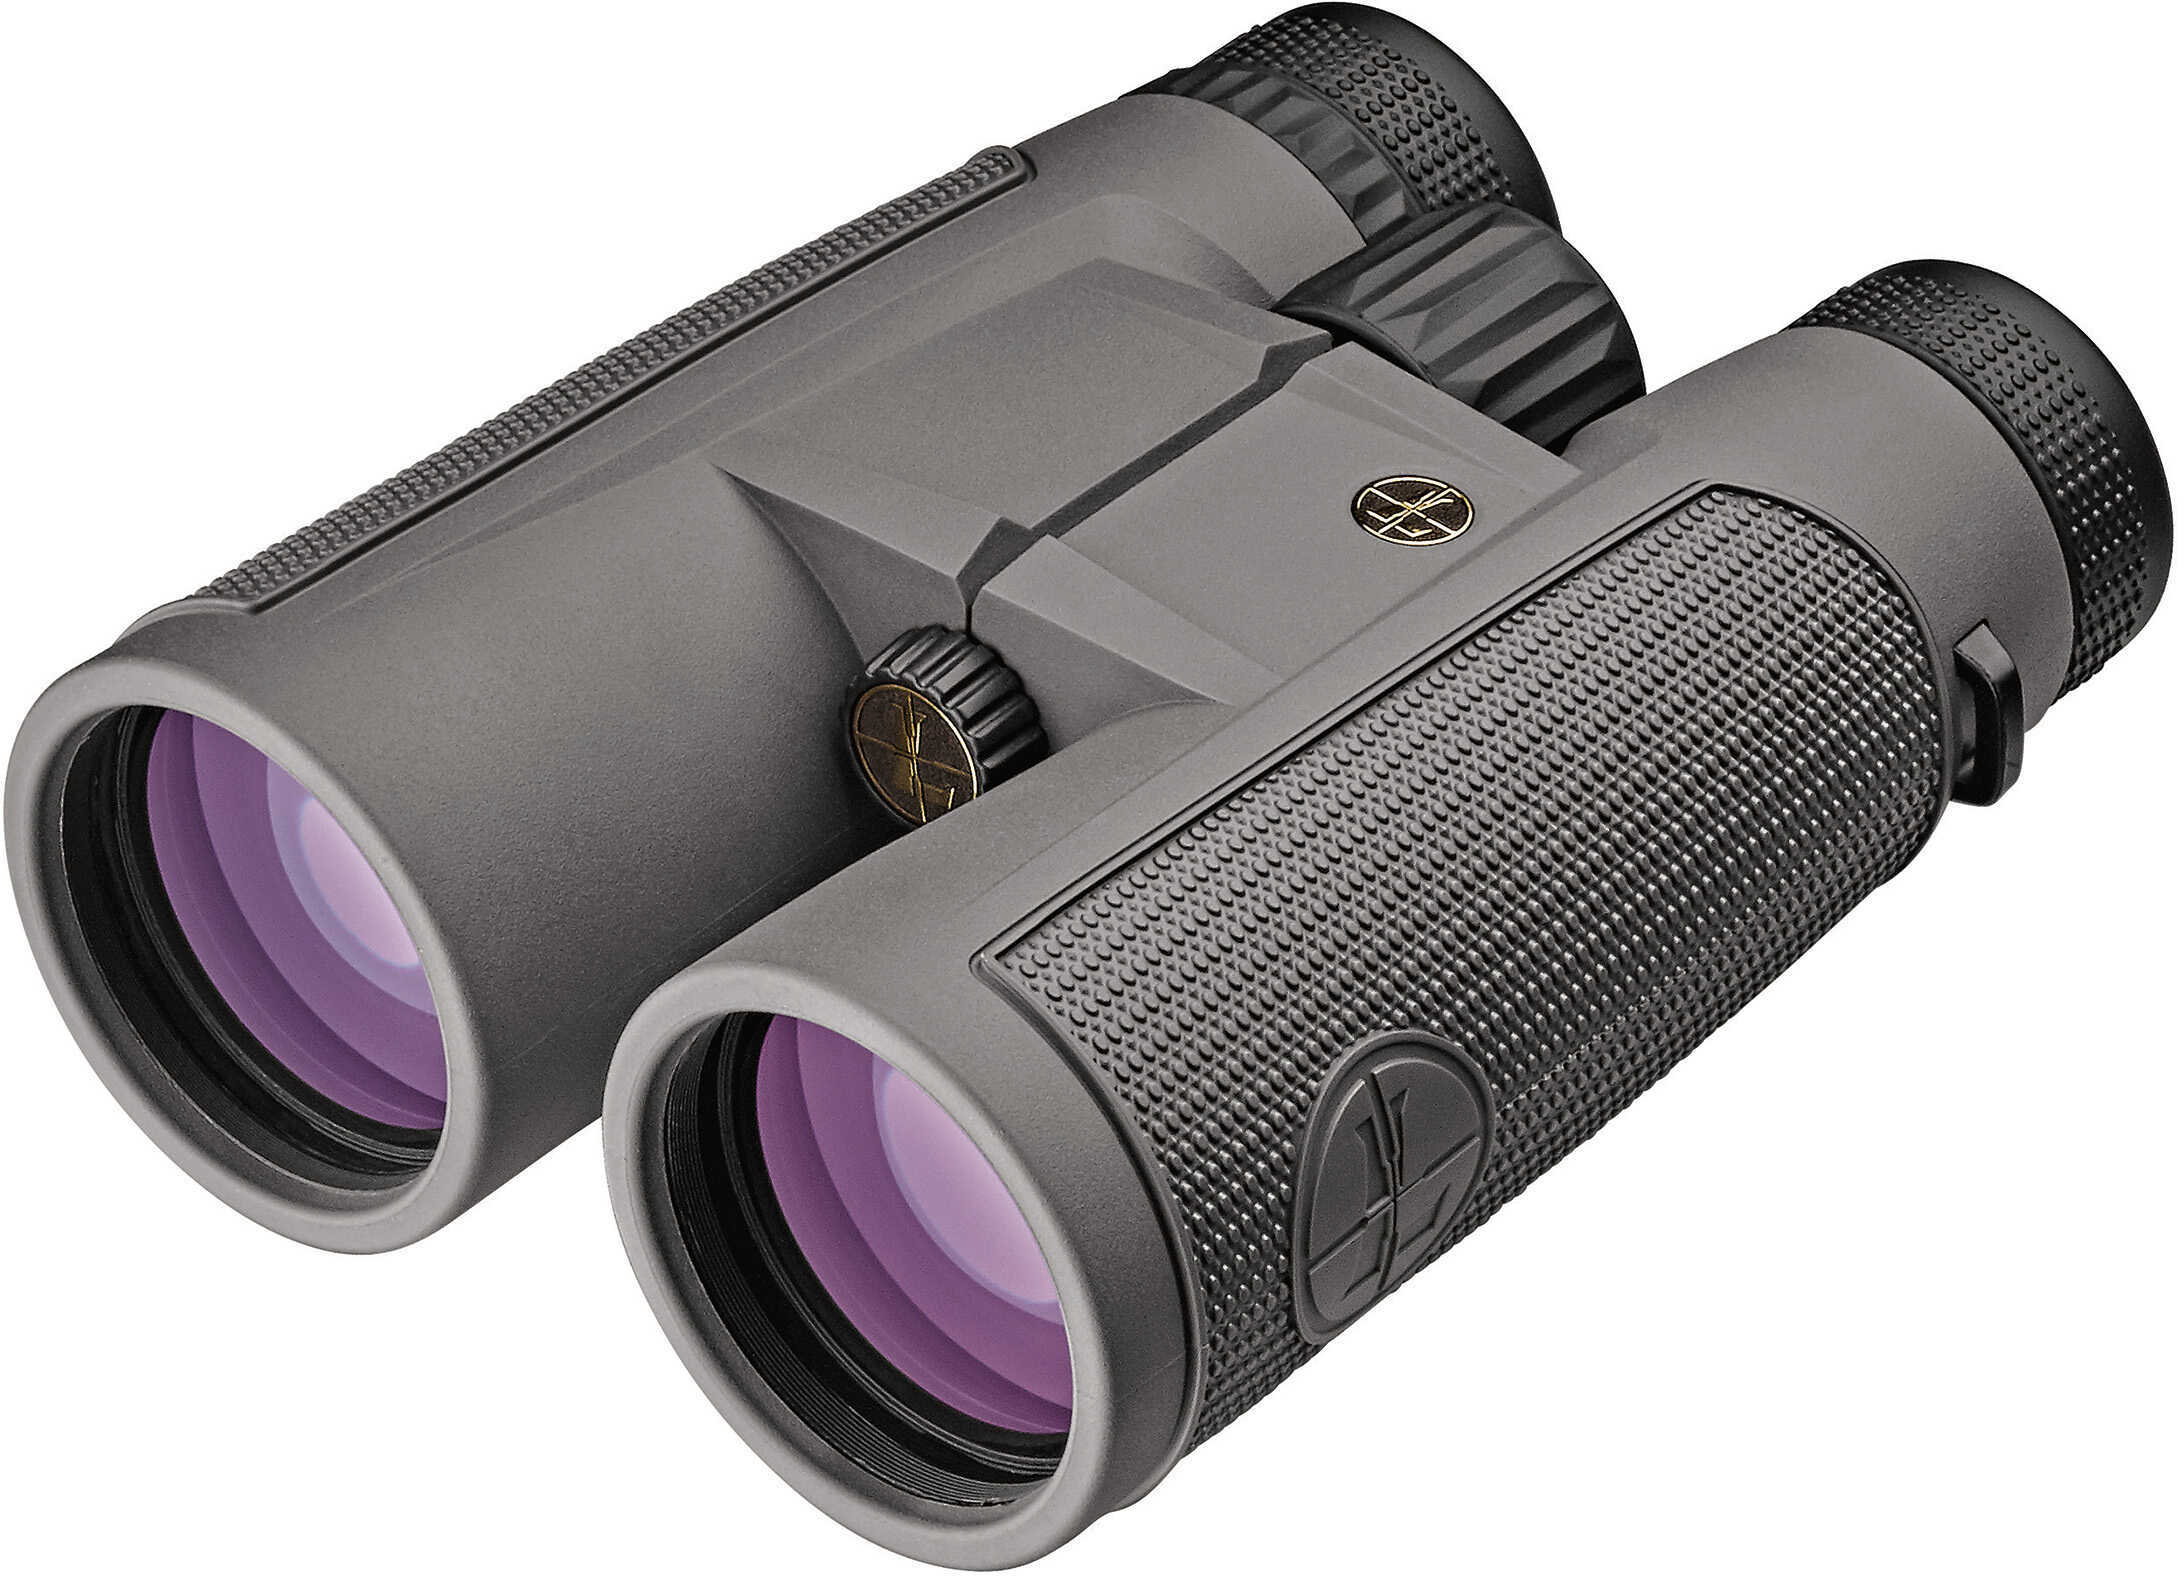 Leupold BX-1 McKenzie Binocular 12x50mm, Roof Prism, Shadow Gray